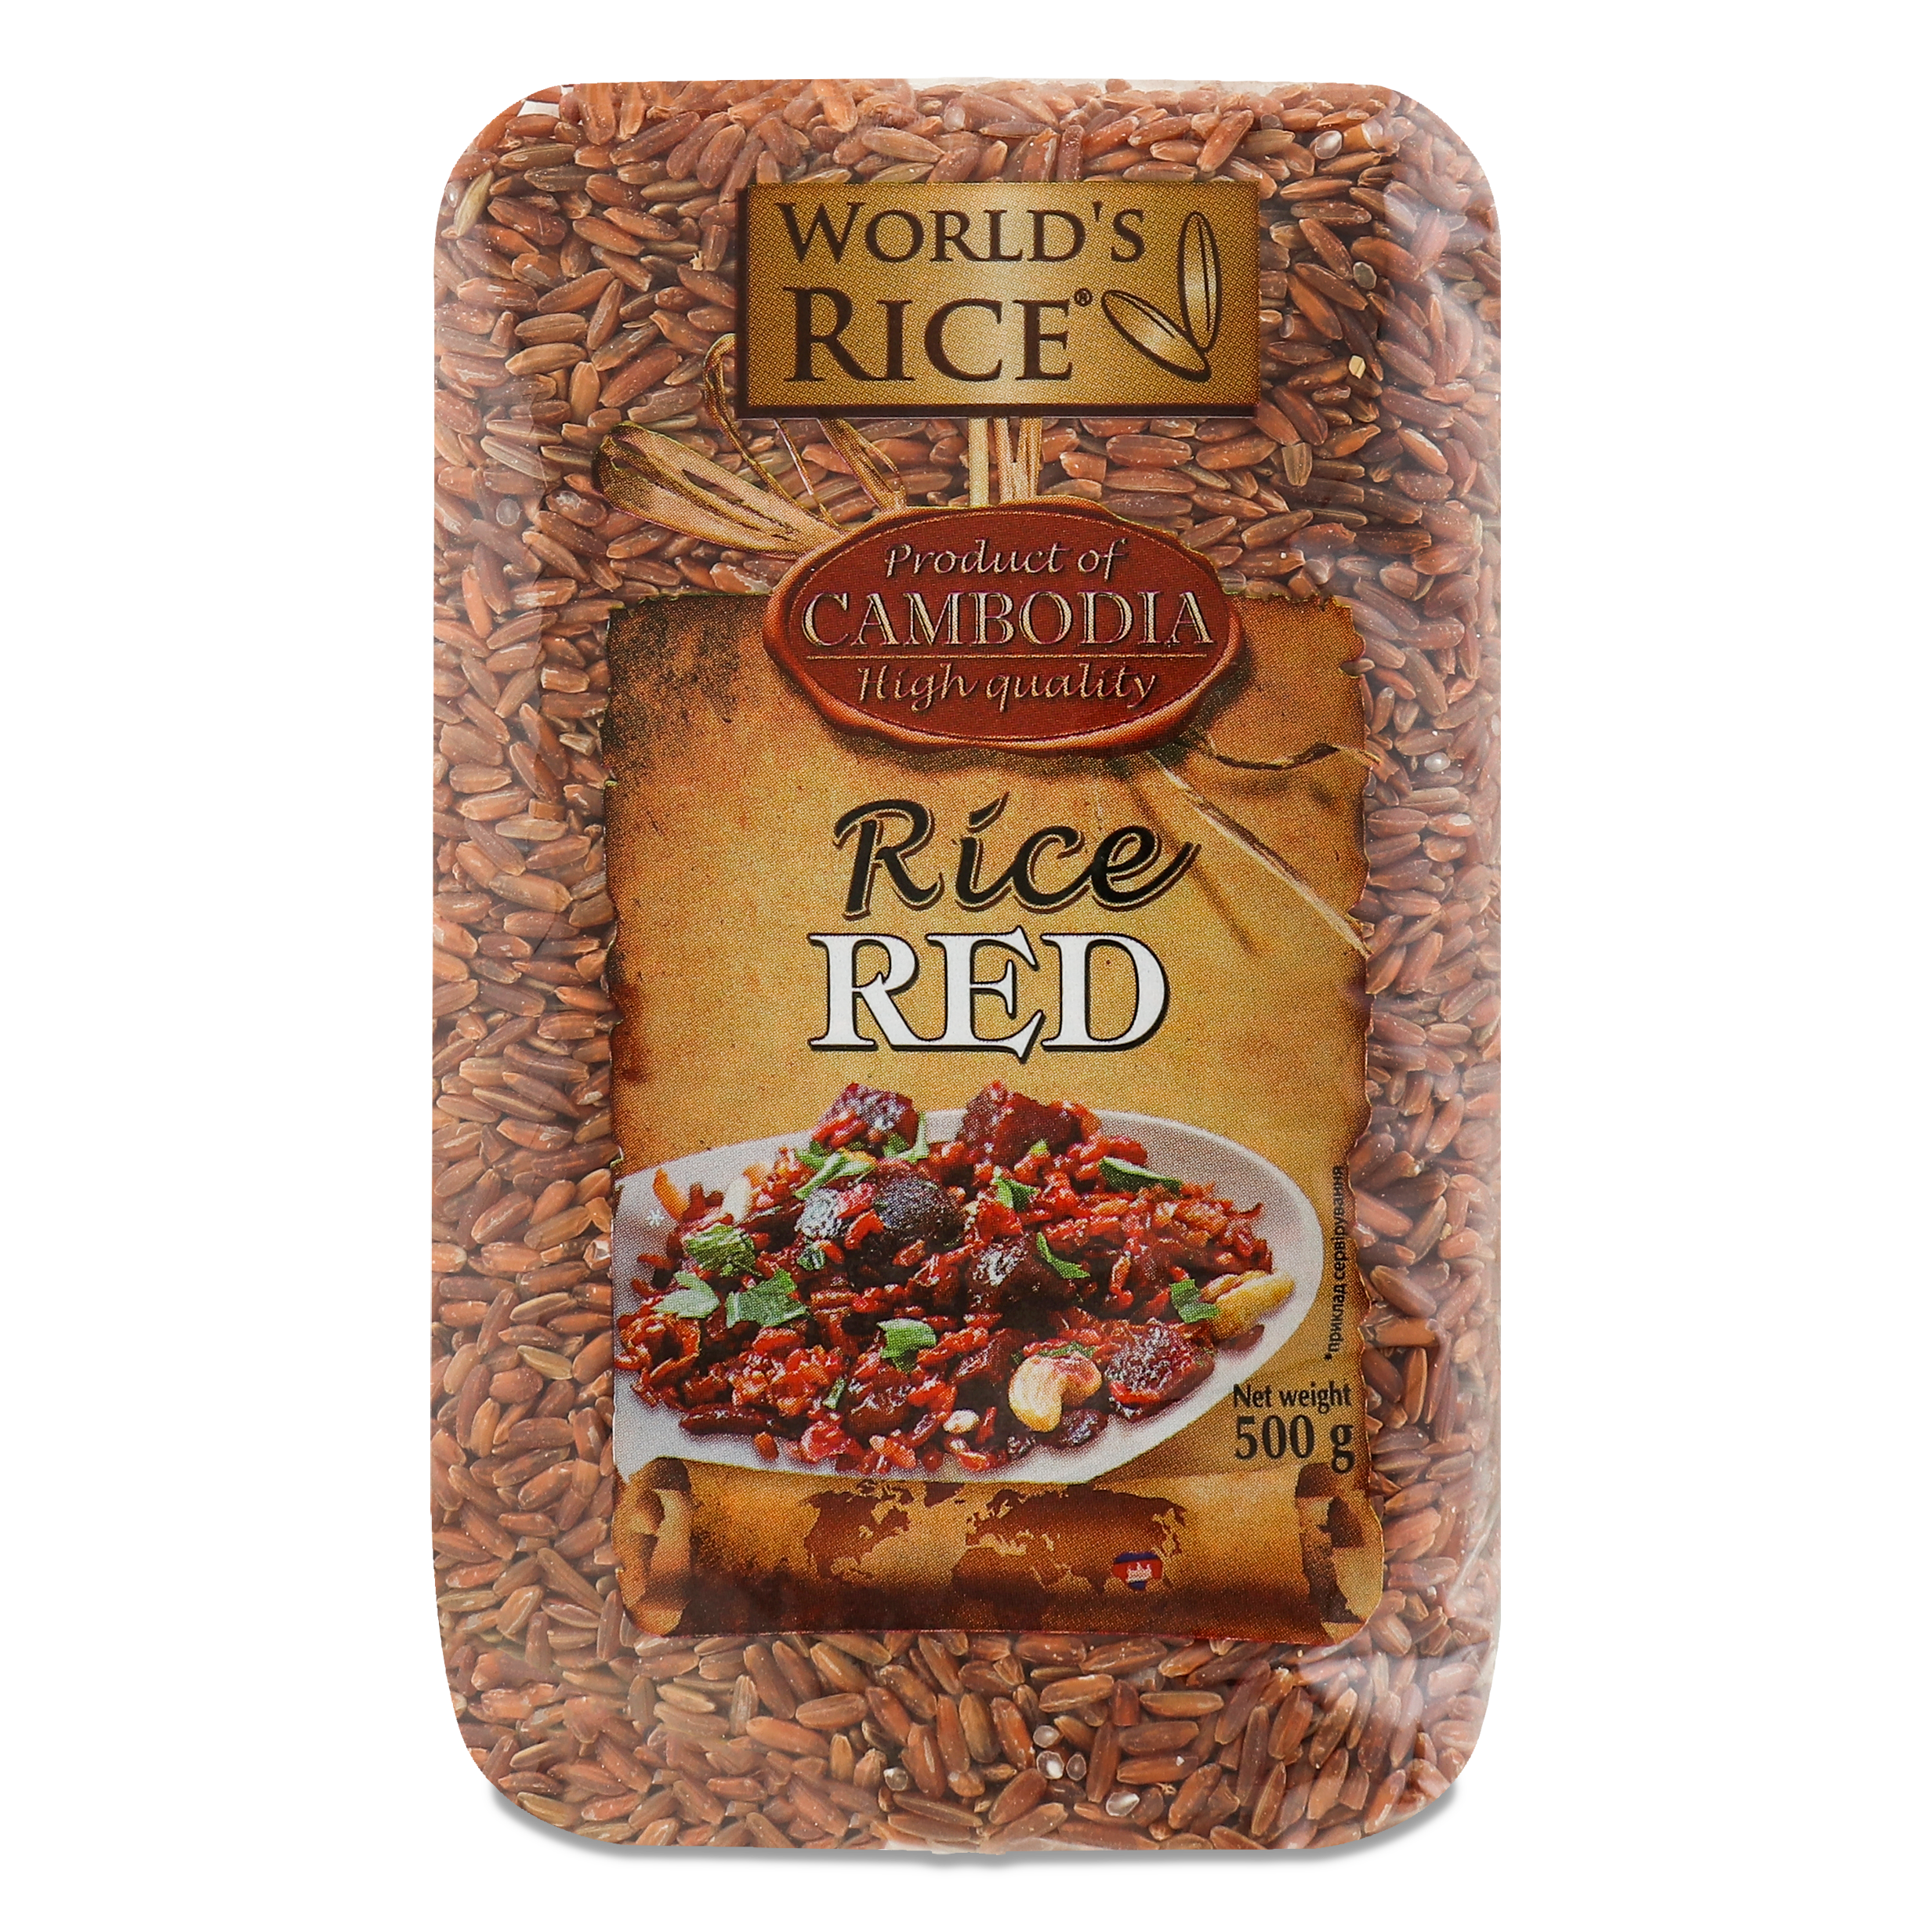 World's Rice long grain red rice 500g